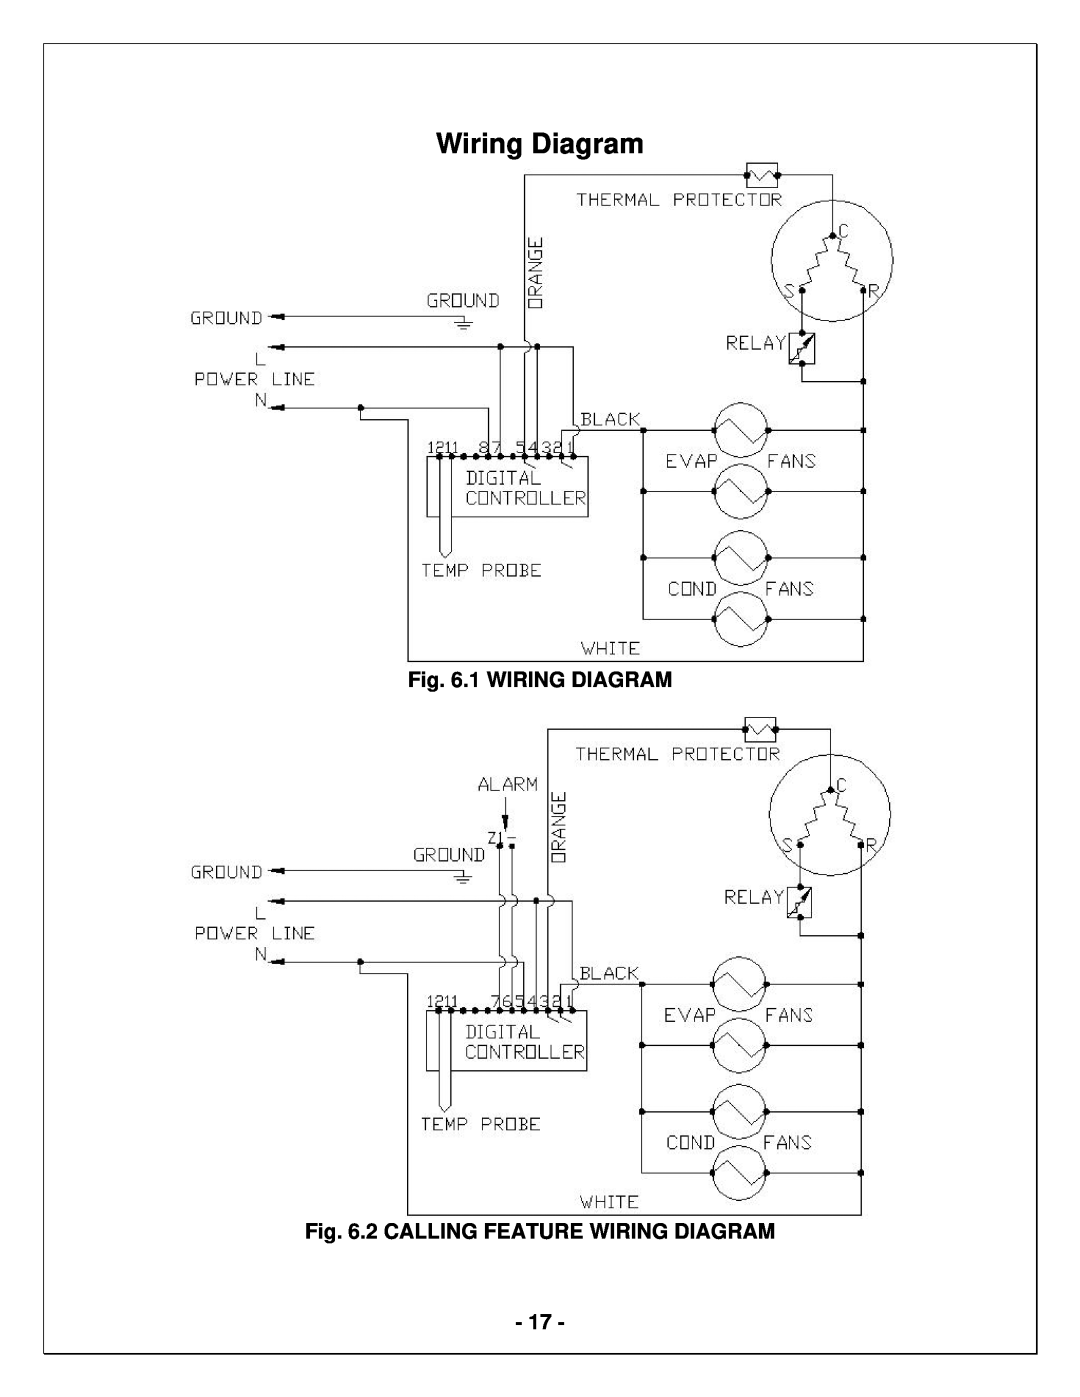 Vinotemp WM1500 HTD-TE, WM2500 HTD-TE manual Wiring Diagram, 1 WIRING DIAGRAM, 2 CALLING FEATURE WIRING DIAGRAM 